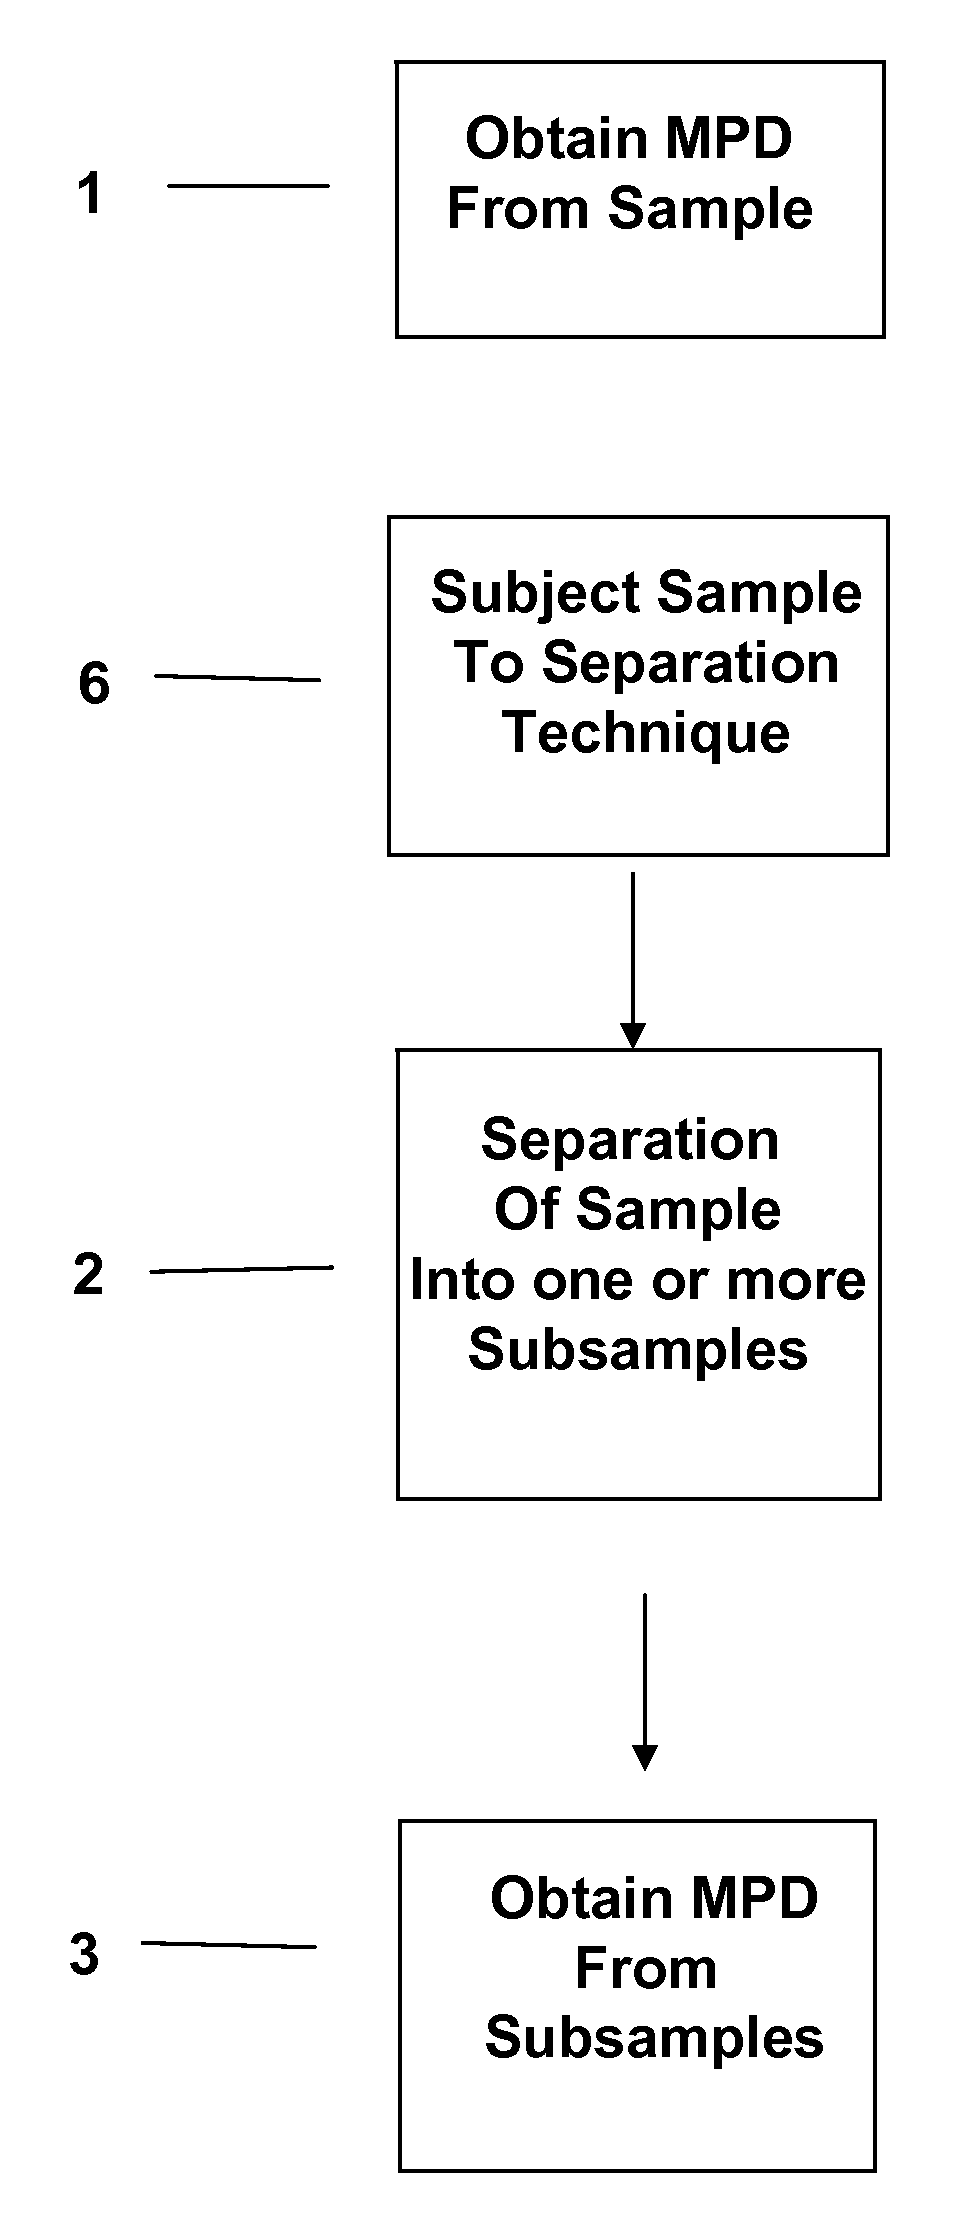 Separation technology method and identification of error